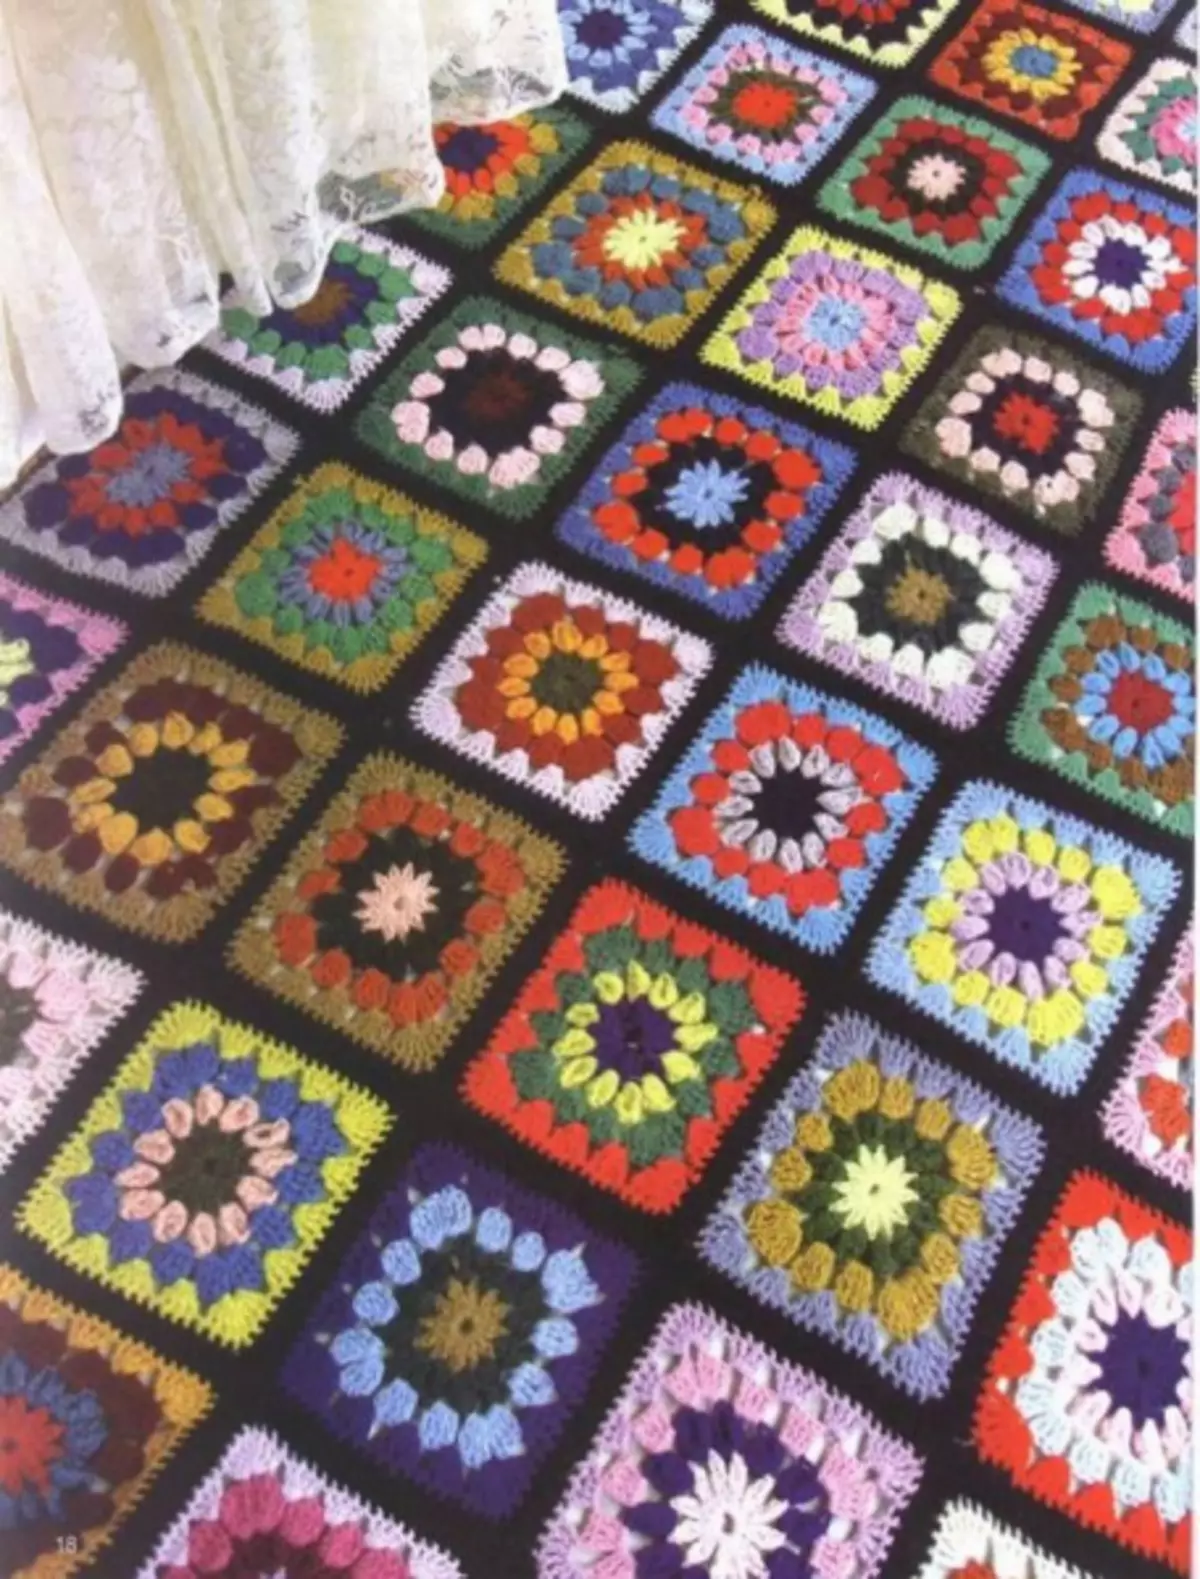 Babushkin Quadrado Crochet: Diagramas multicoloridos com fotos e vídeos